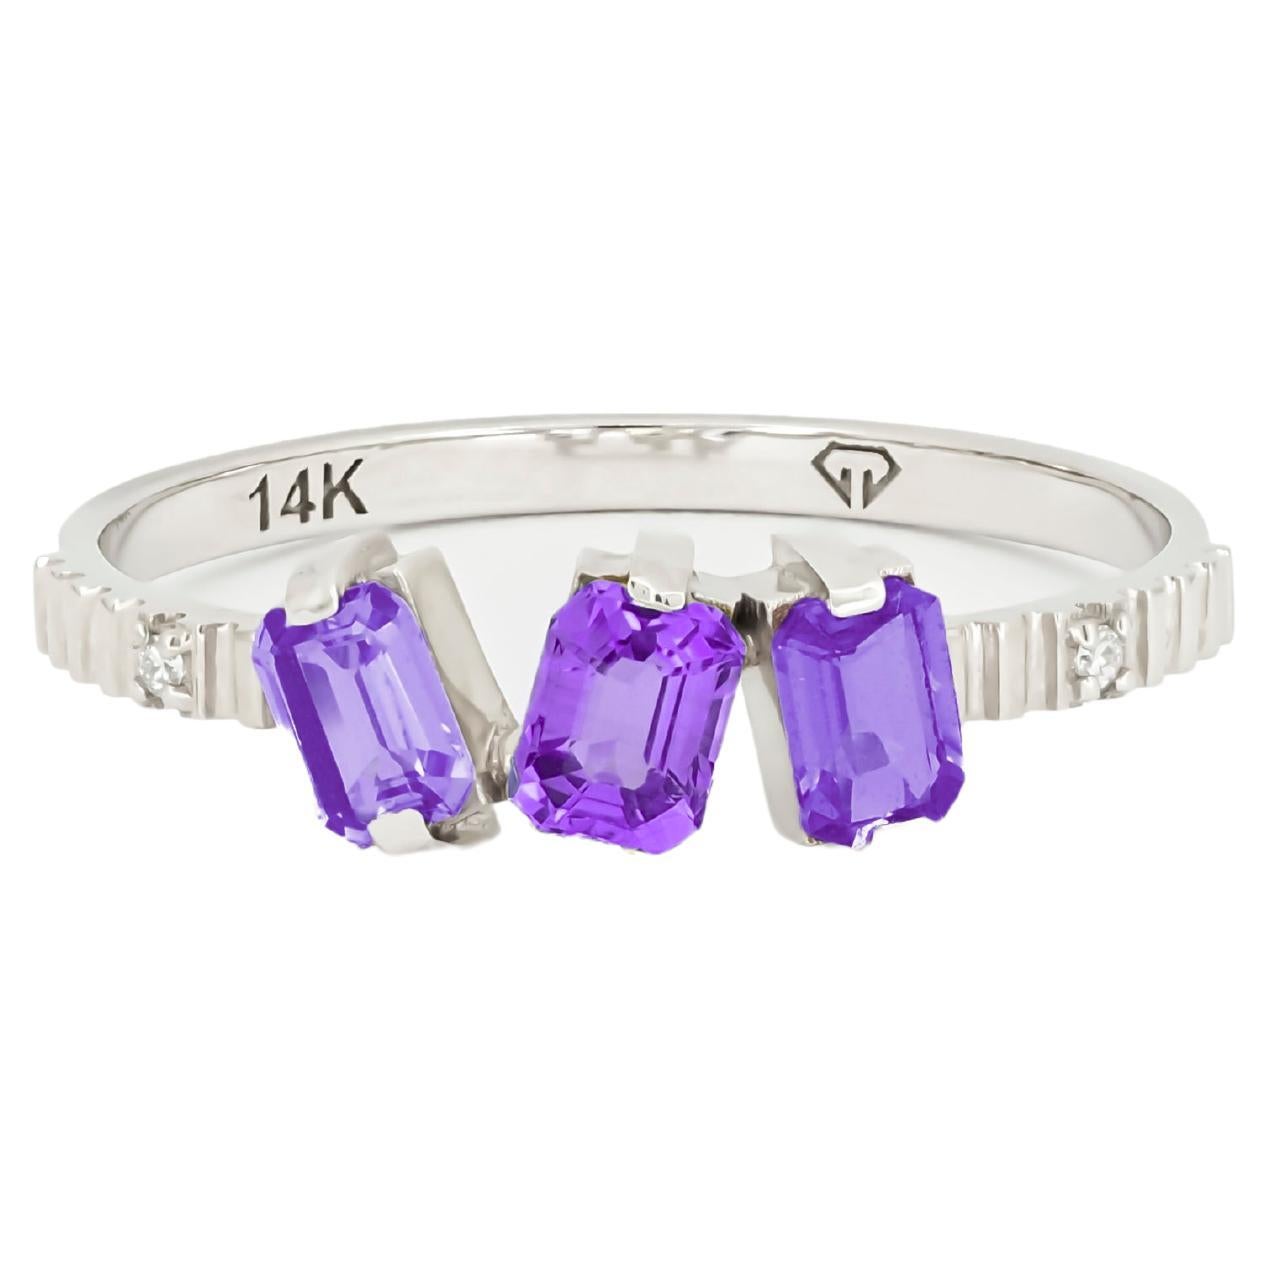 For Sale:  Monochrome purple gemstone 14k ring.